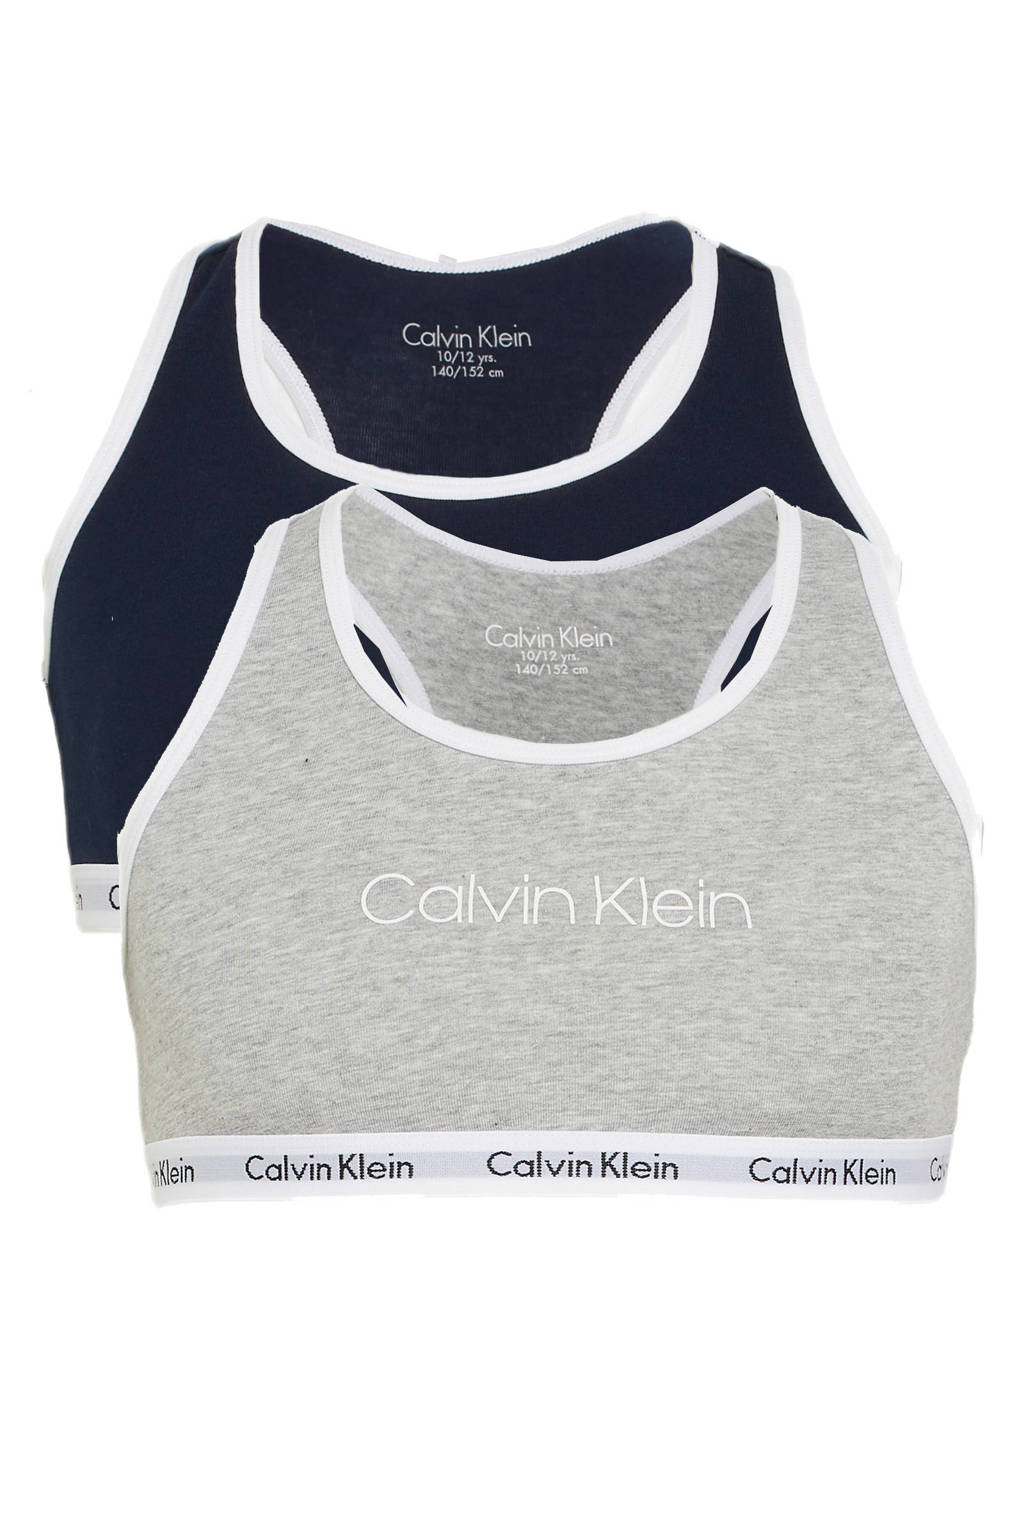 Calvin Klein bh - set van 2 donkerblauw/lichtgrijs, Donkerblauw/grijs